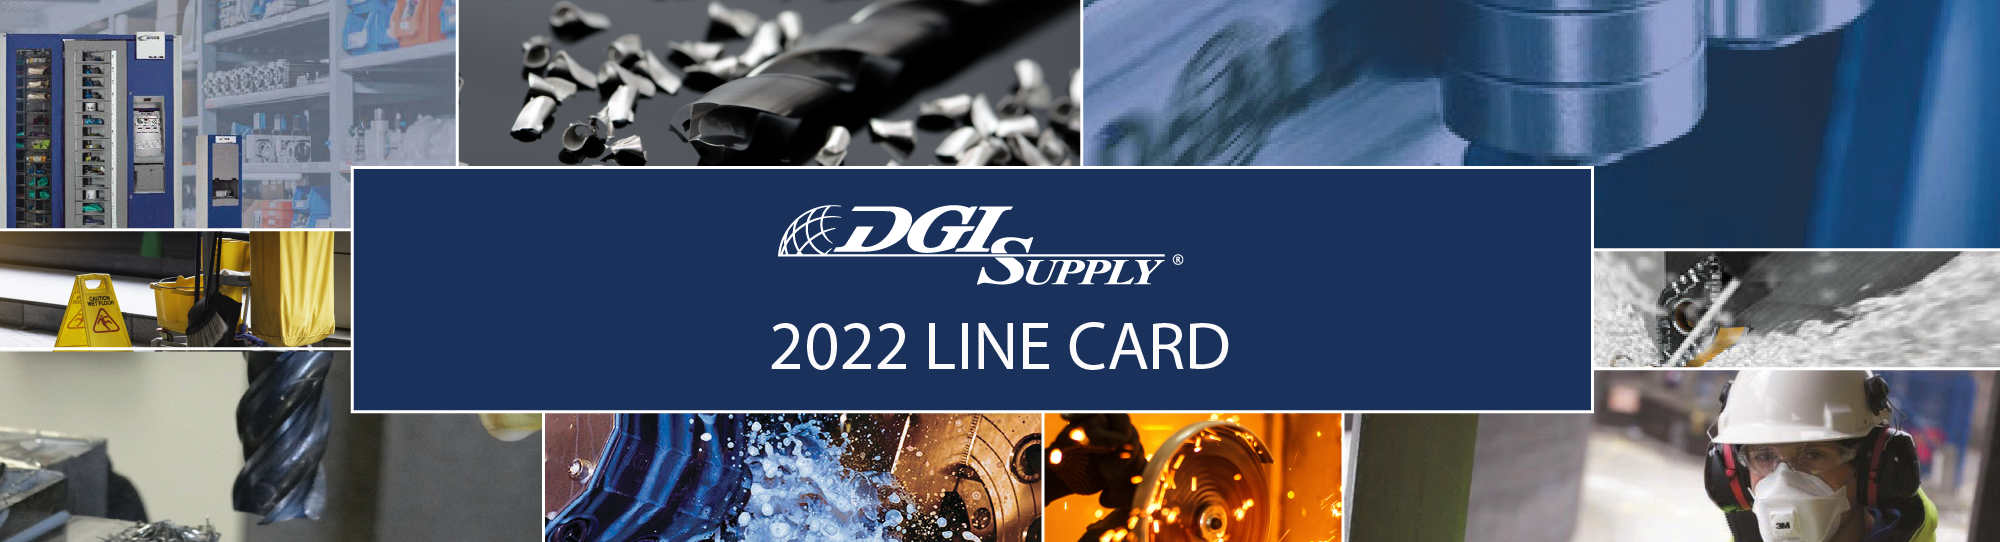 2022 Line Card